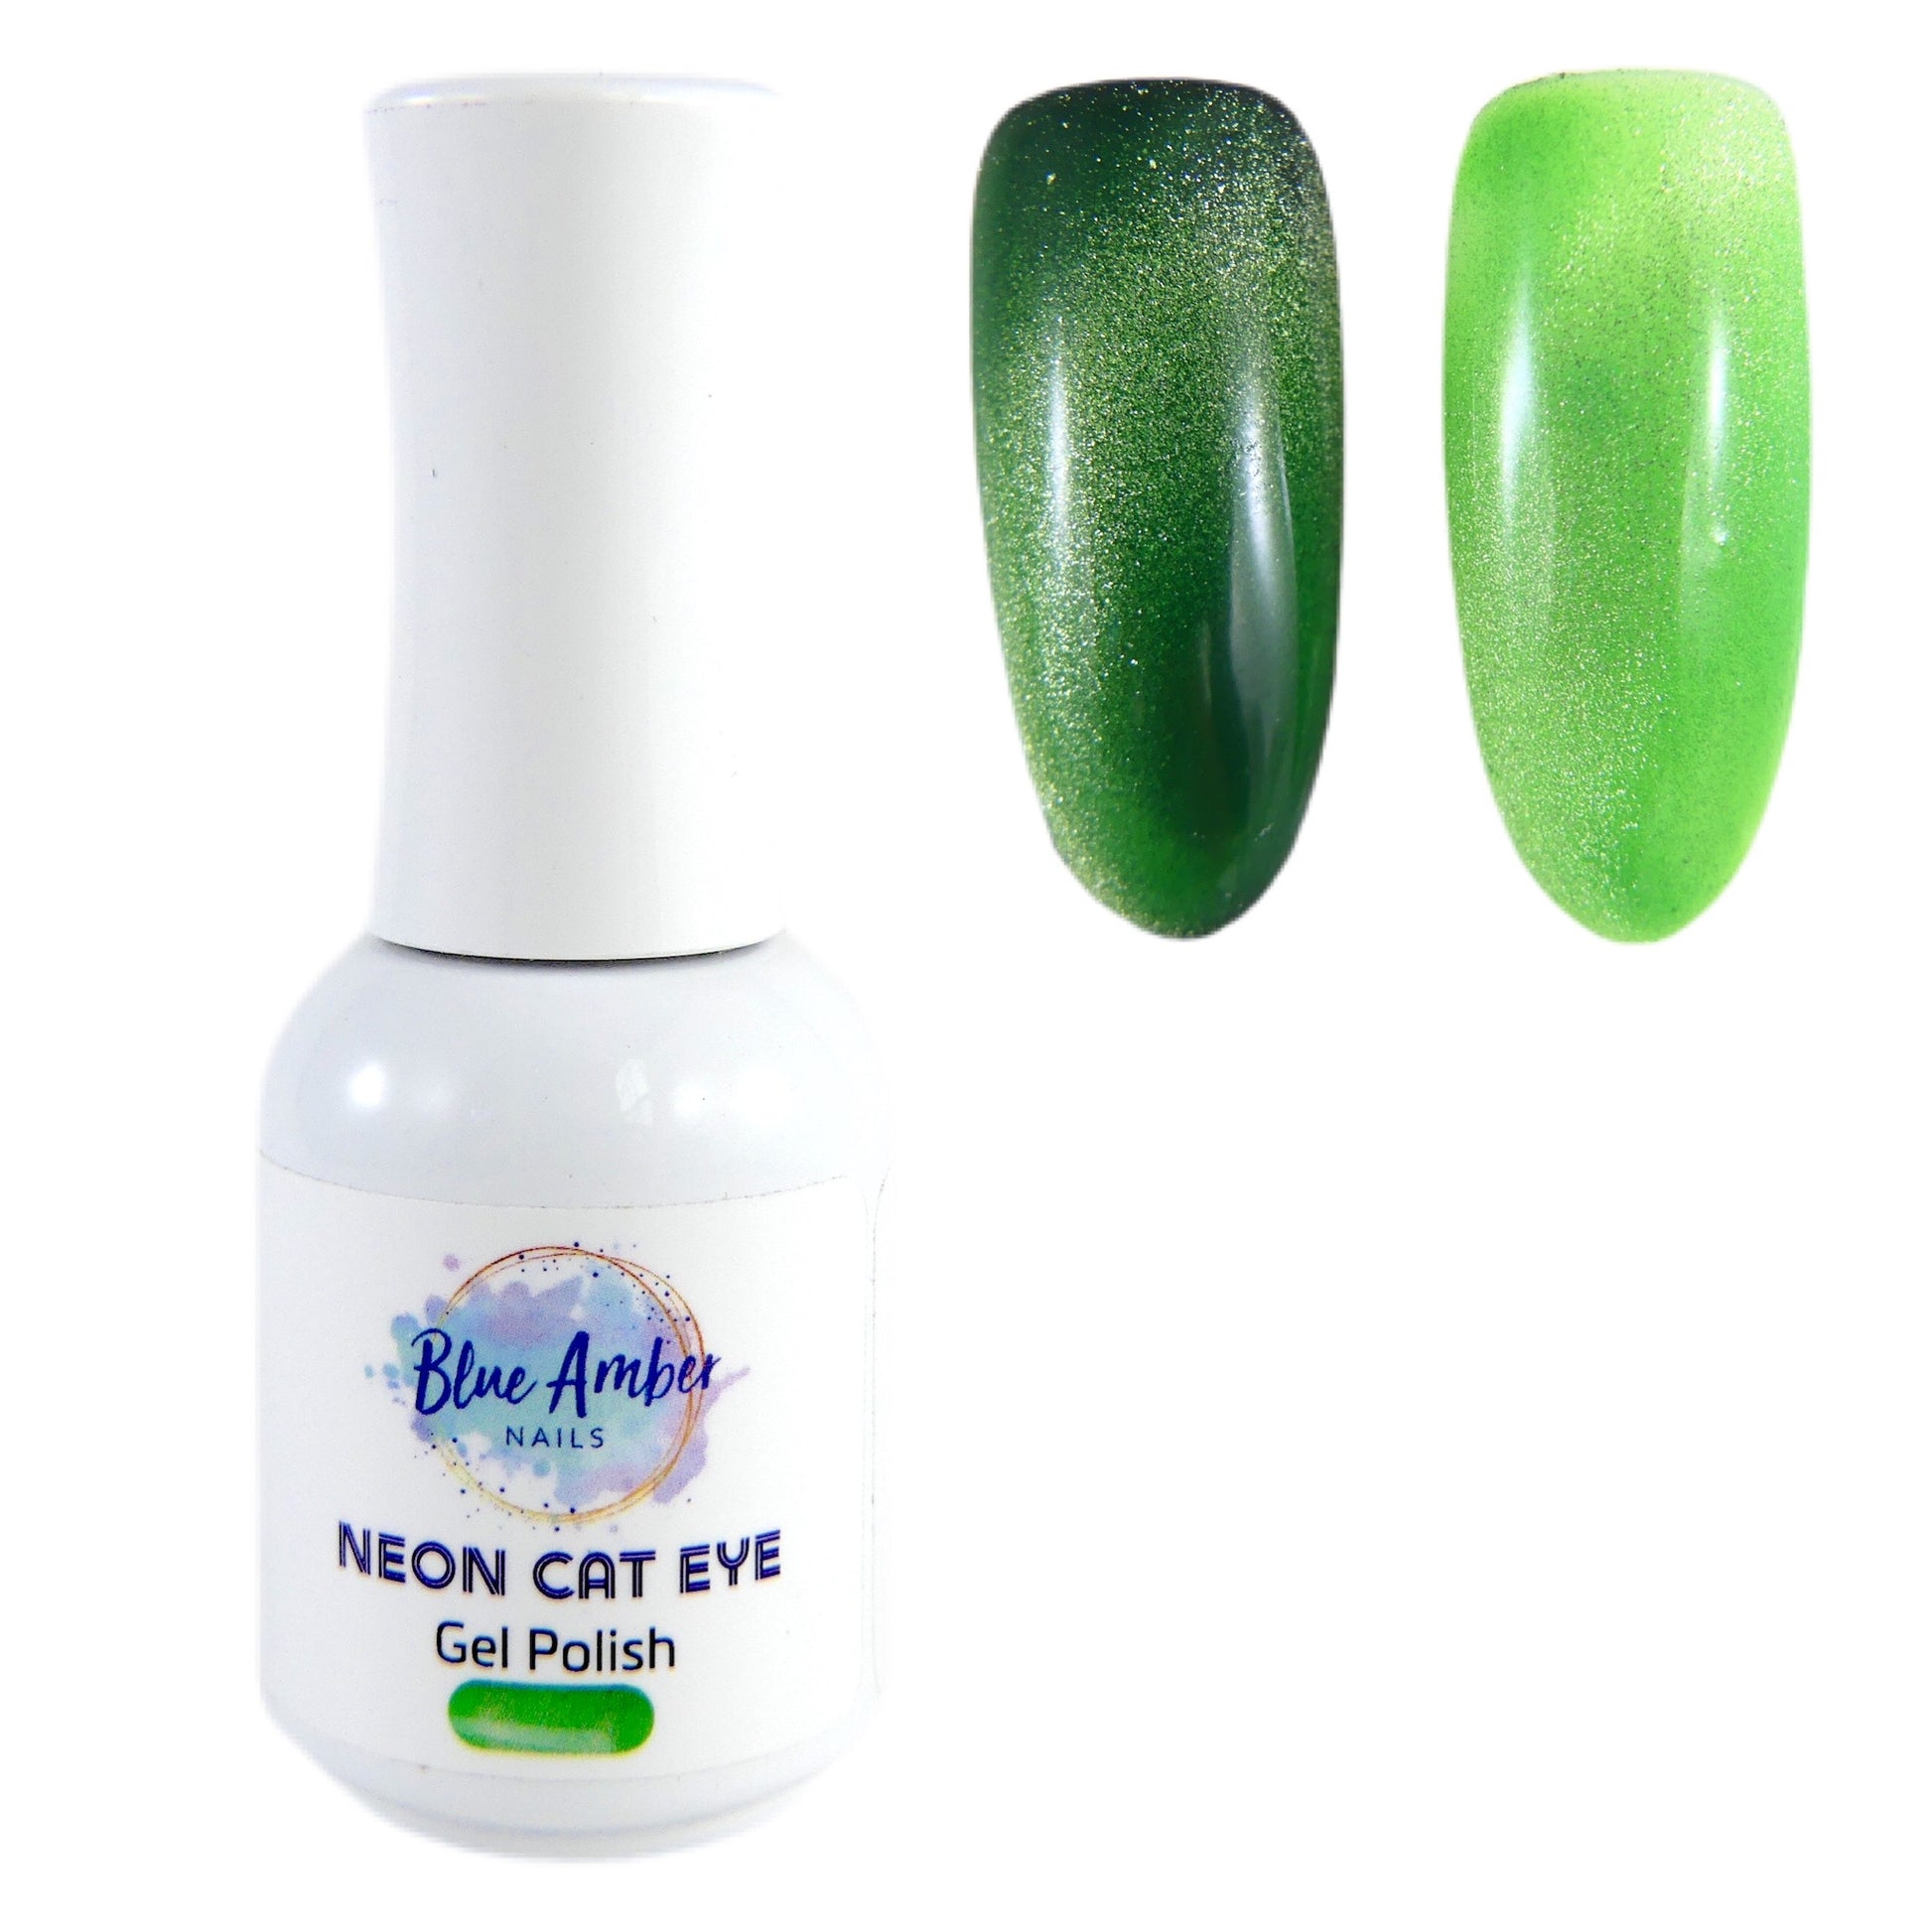 Neon Cat Eye Gel Polish - Green - My Little Nail Art Shop